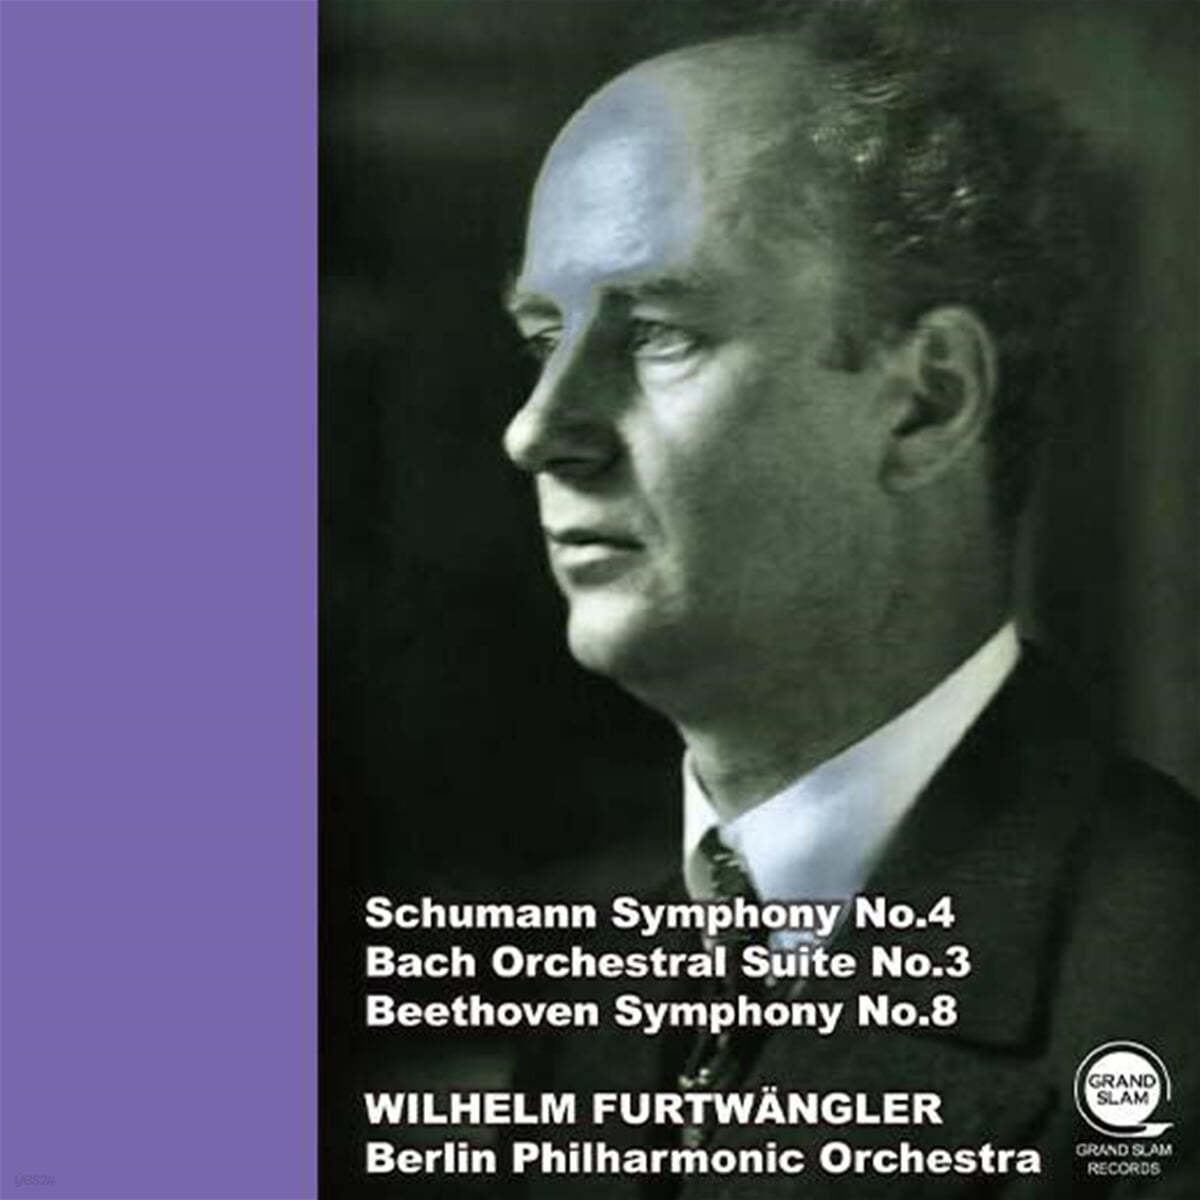 Wilhelm Furtwangler 슈만: 교향곡 4번 / 바흐: 관현악조곡 3번 / 베토벤: 교향곡 8번 (Schumann: Symphony No. 4, J.S. Bach: Orchestral Suite No. 3, Beethoven: Symphony No. 8)